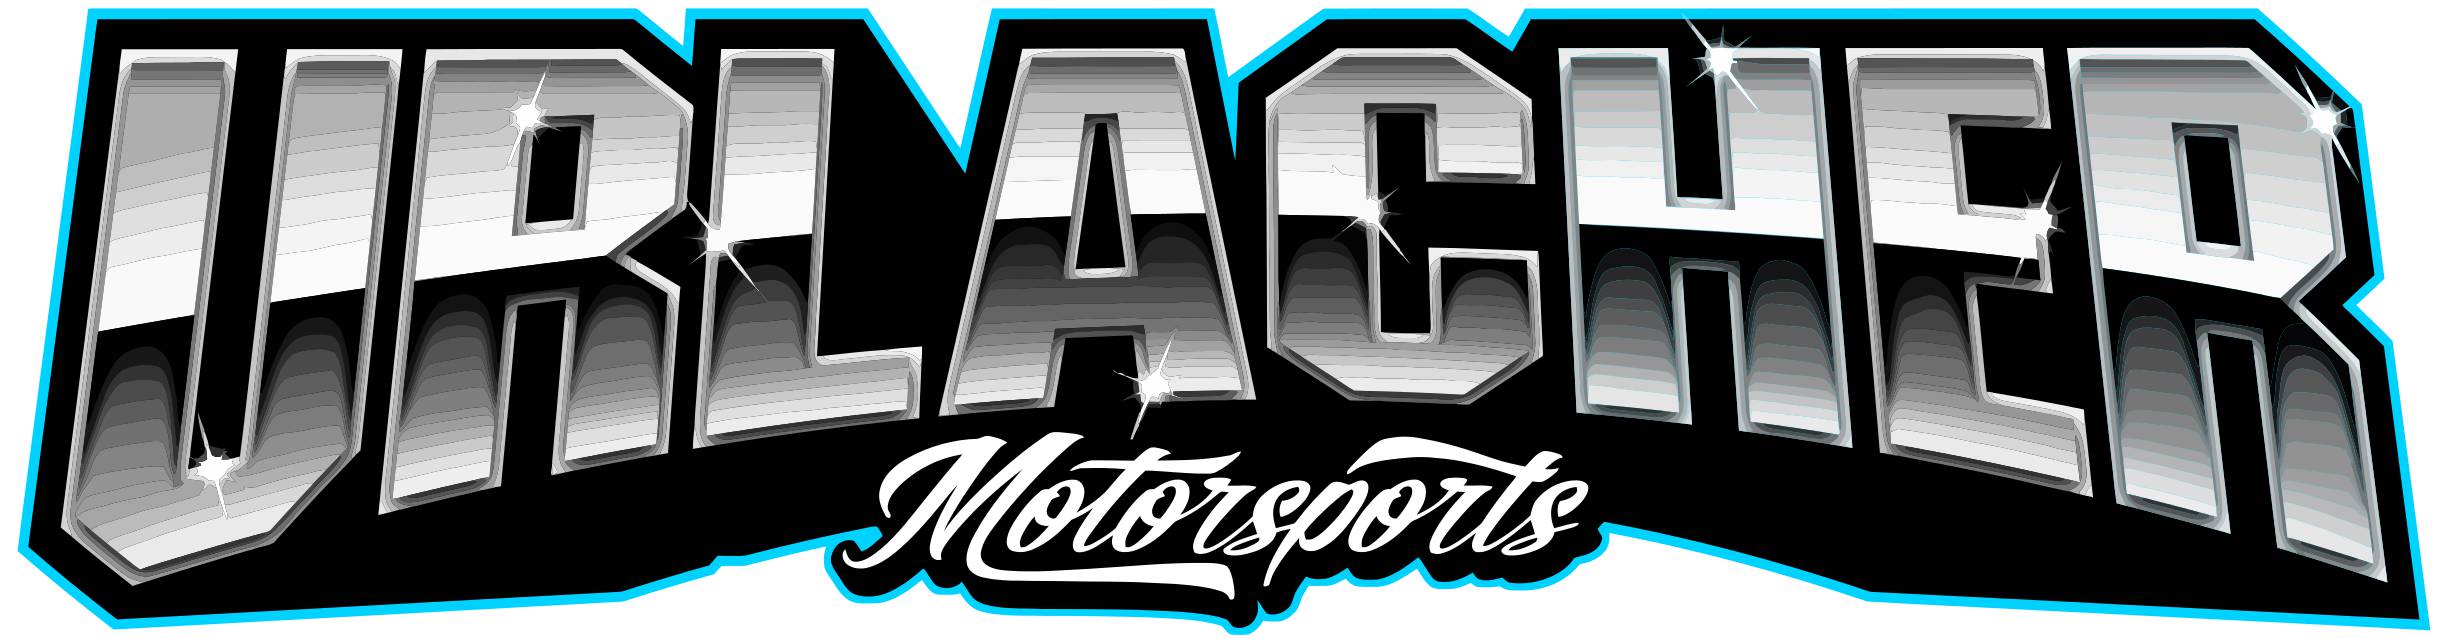 Urlacher_Motorsports_logo_copy